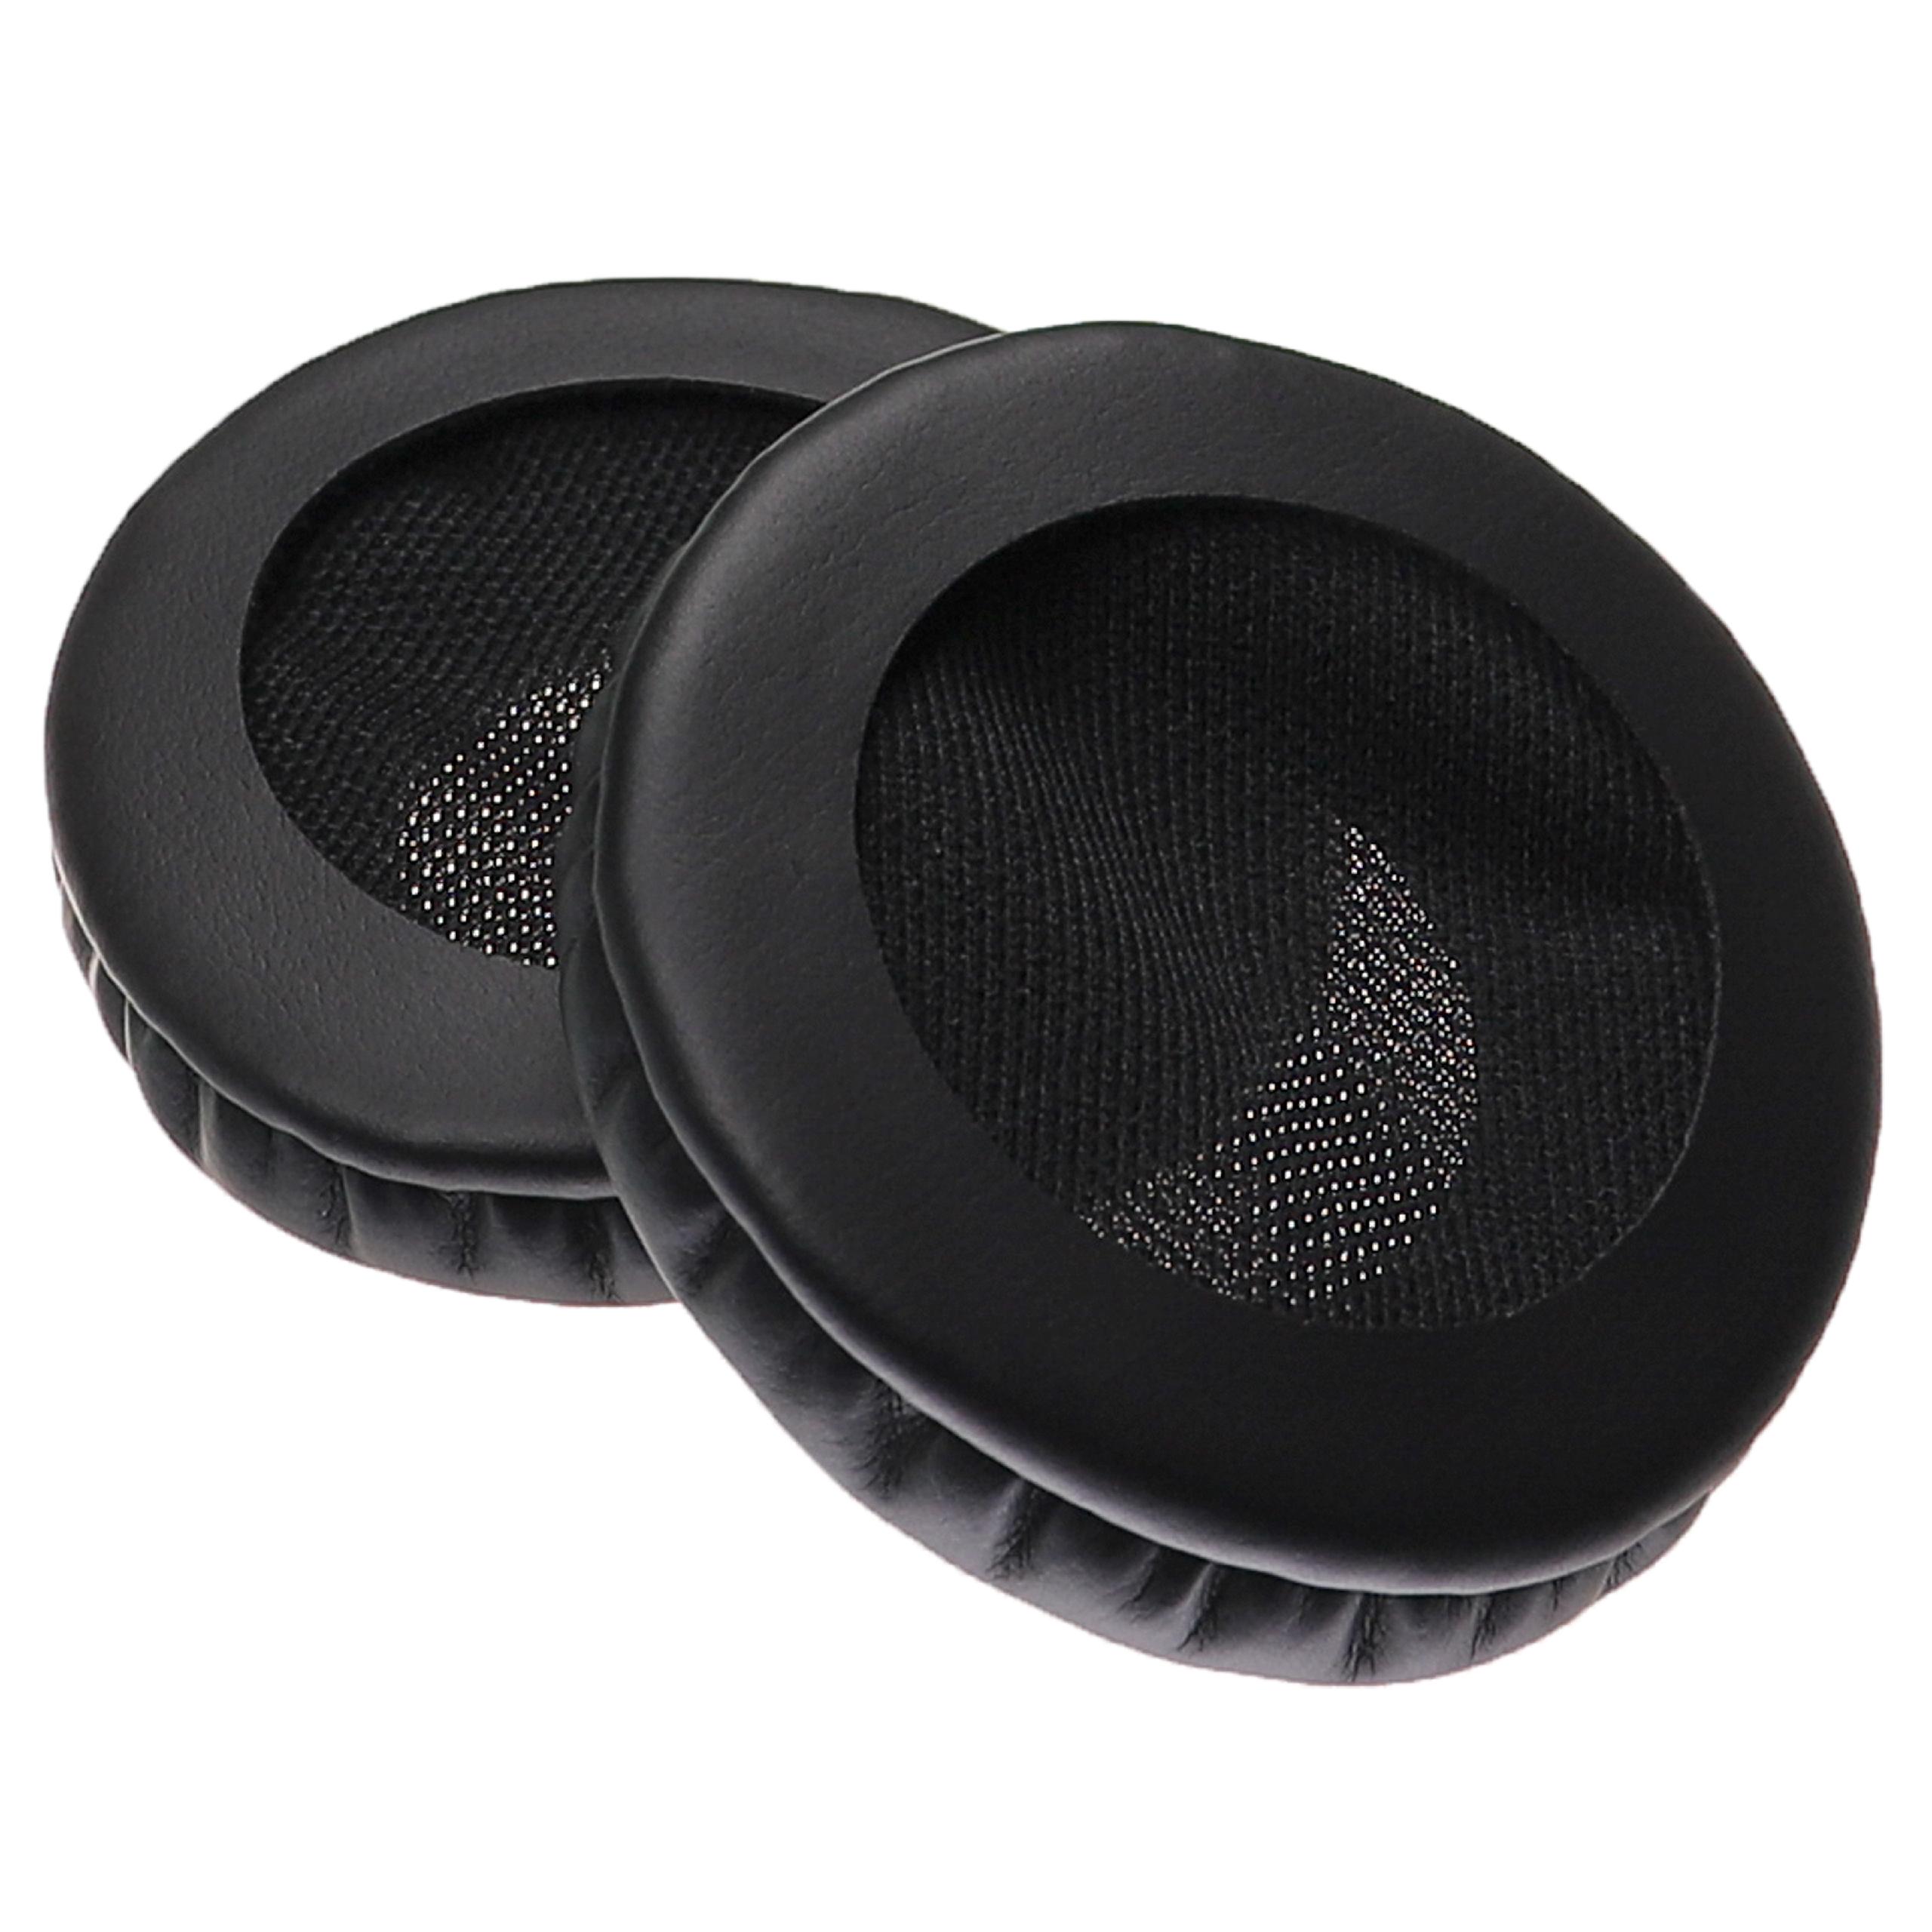 Ohrenpolster für Sony MDR-V100 Kopfhörer u.a., 7,2 x 7 cm, Schwarz